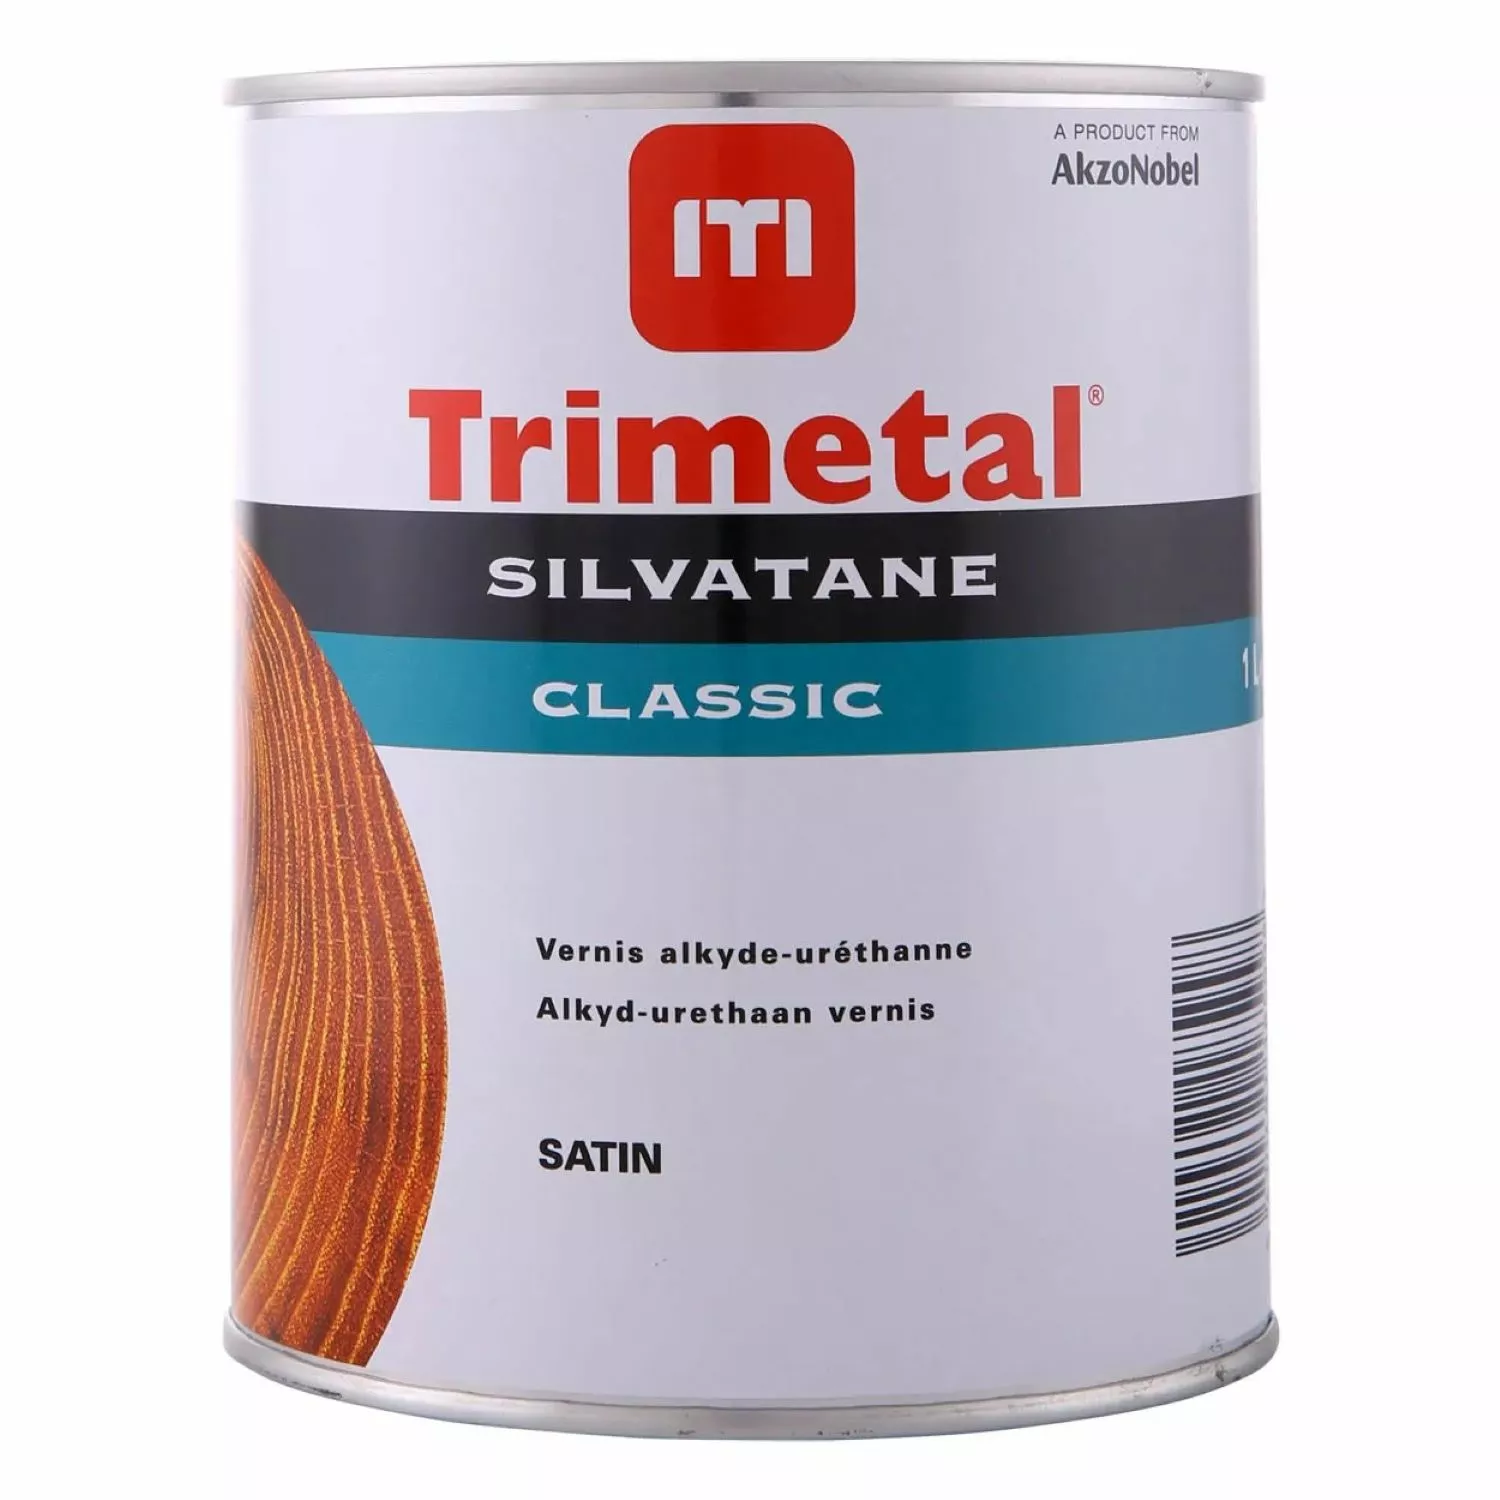 Trimetal Silvatane Classic Satin 1L-image